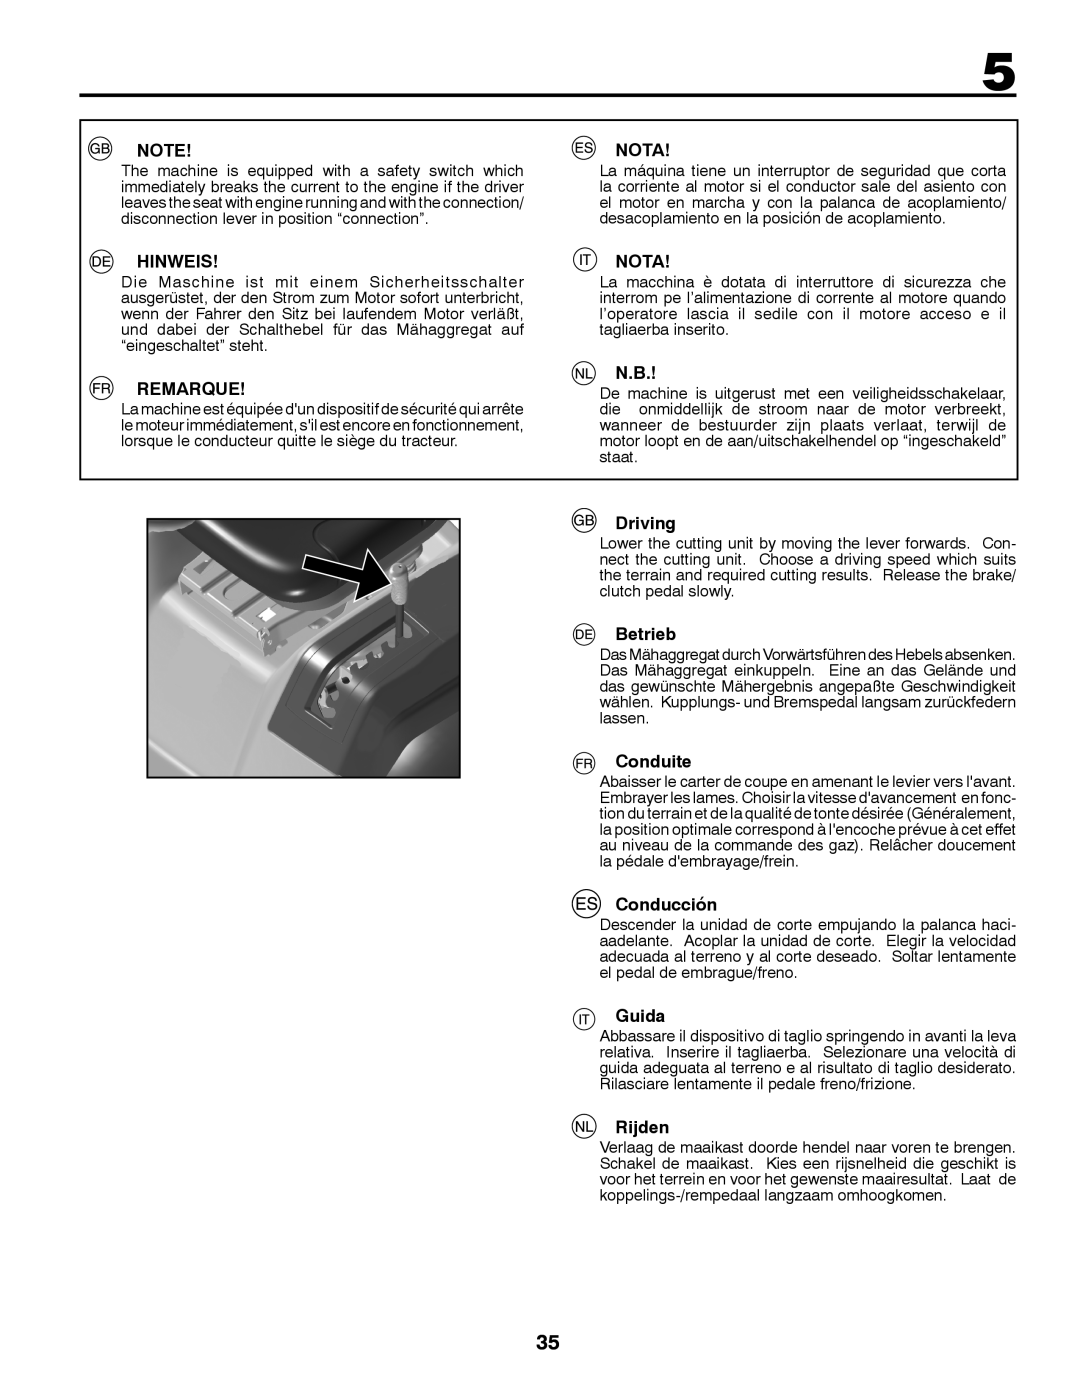 Husqvarna LT126 instruction manual Hinweis, Remarque, Nota, Driving, Betrieb, Conduite, Conducción, Guida, Rijden 